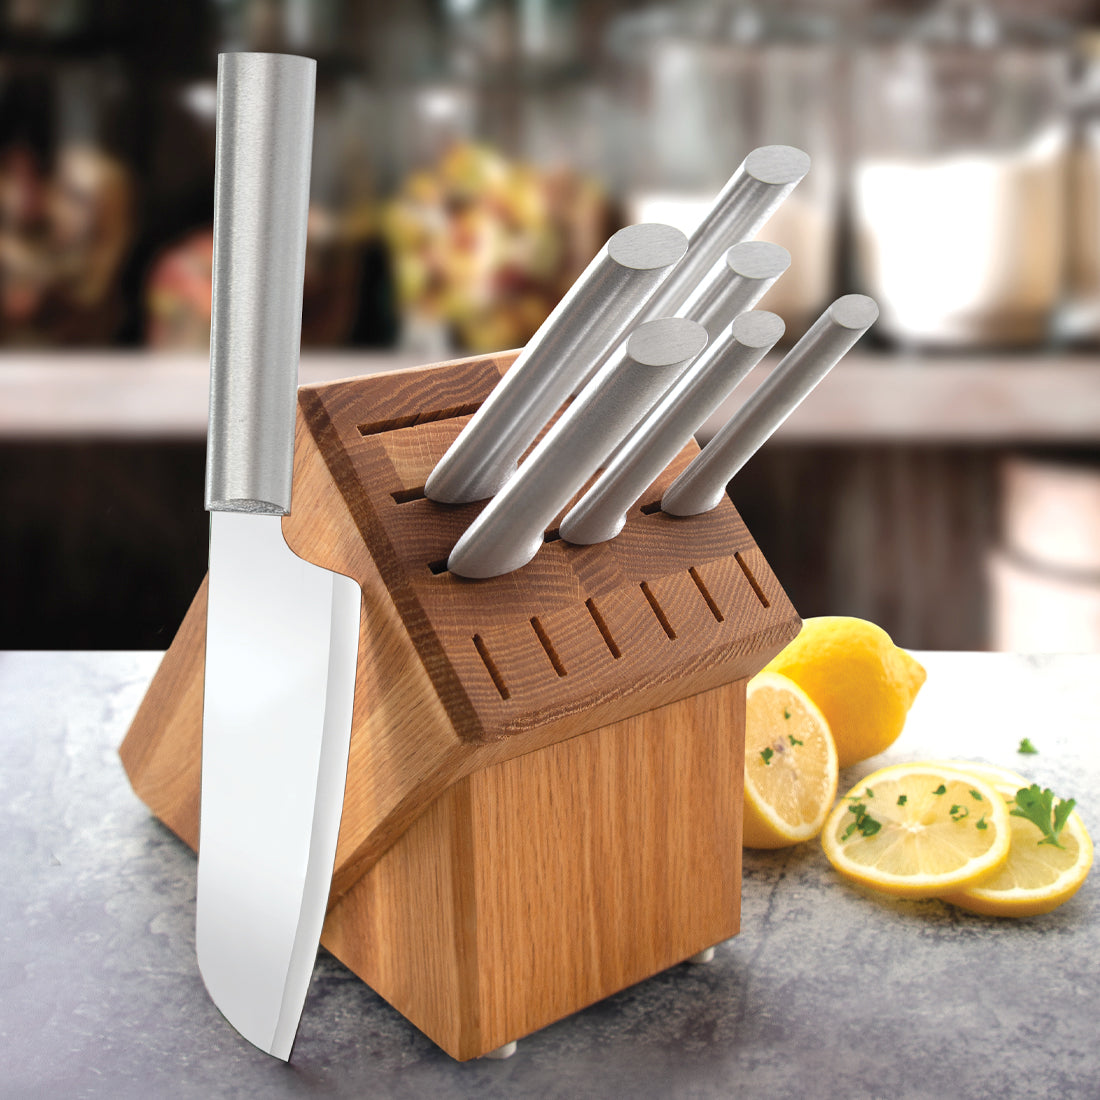 Rada Cutlery S38 7-pc Starter Gift Set + R119 Knife Sharpener